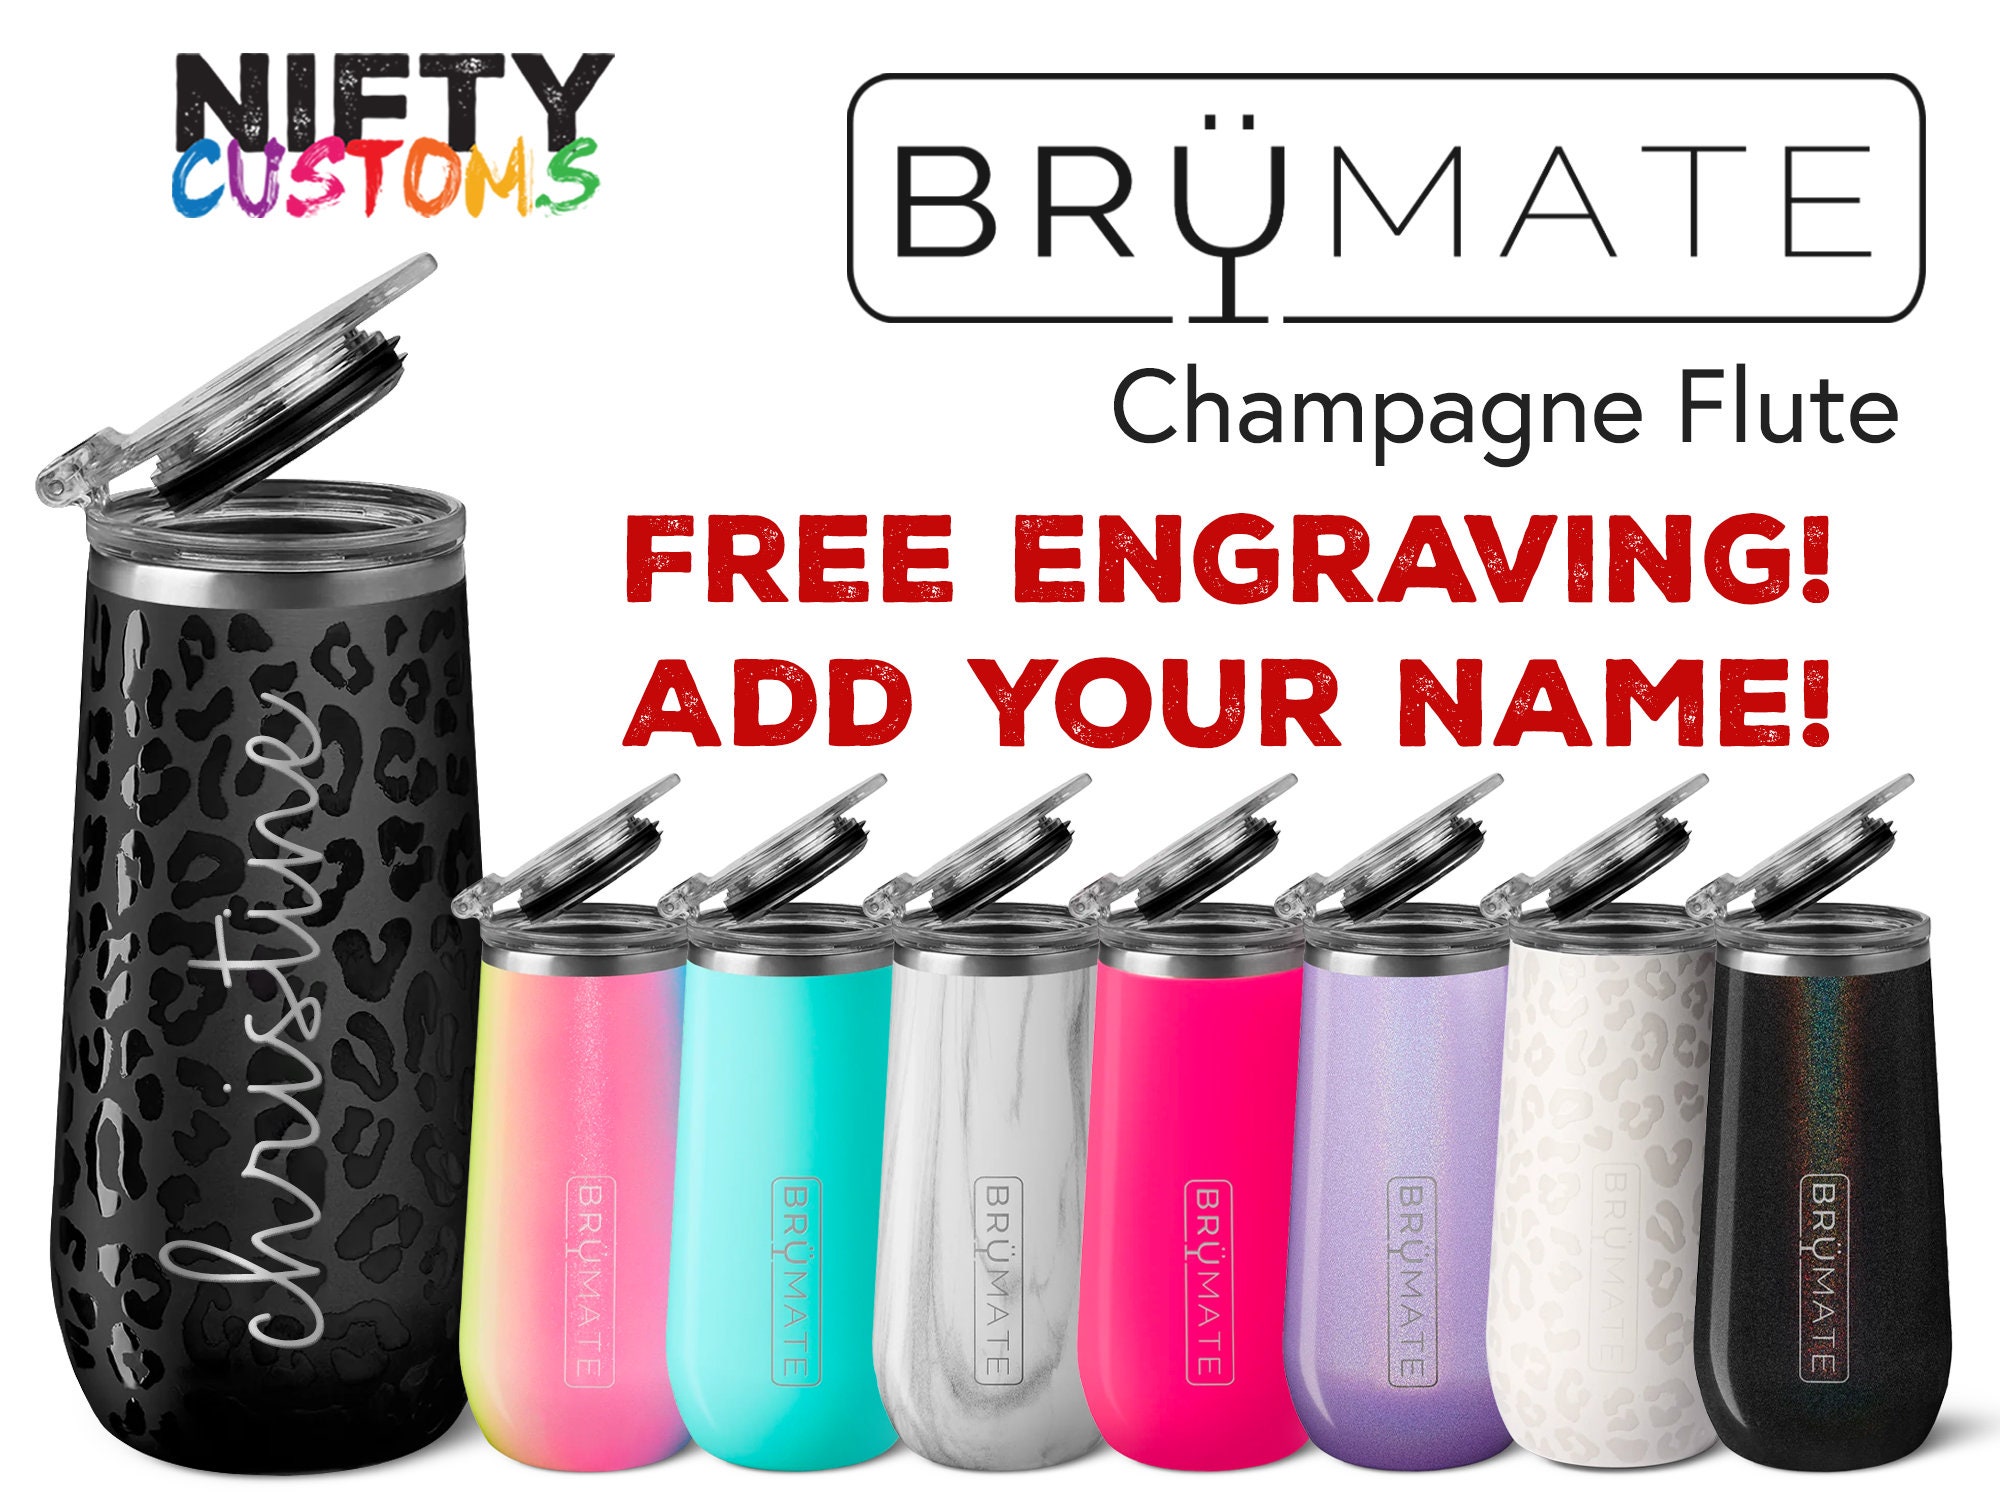 BruMate champagne flute black stainless